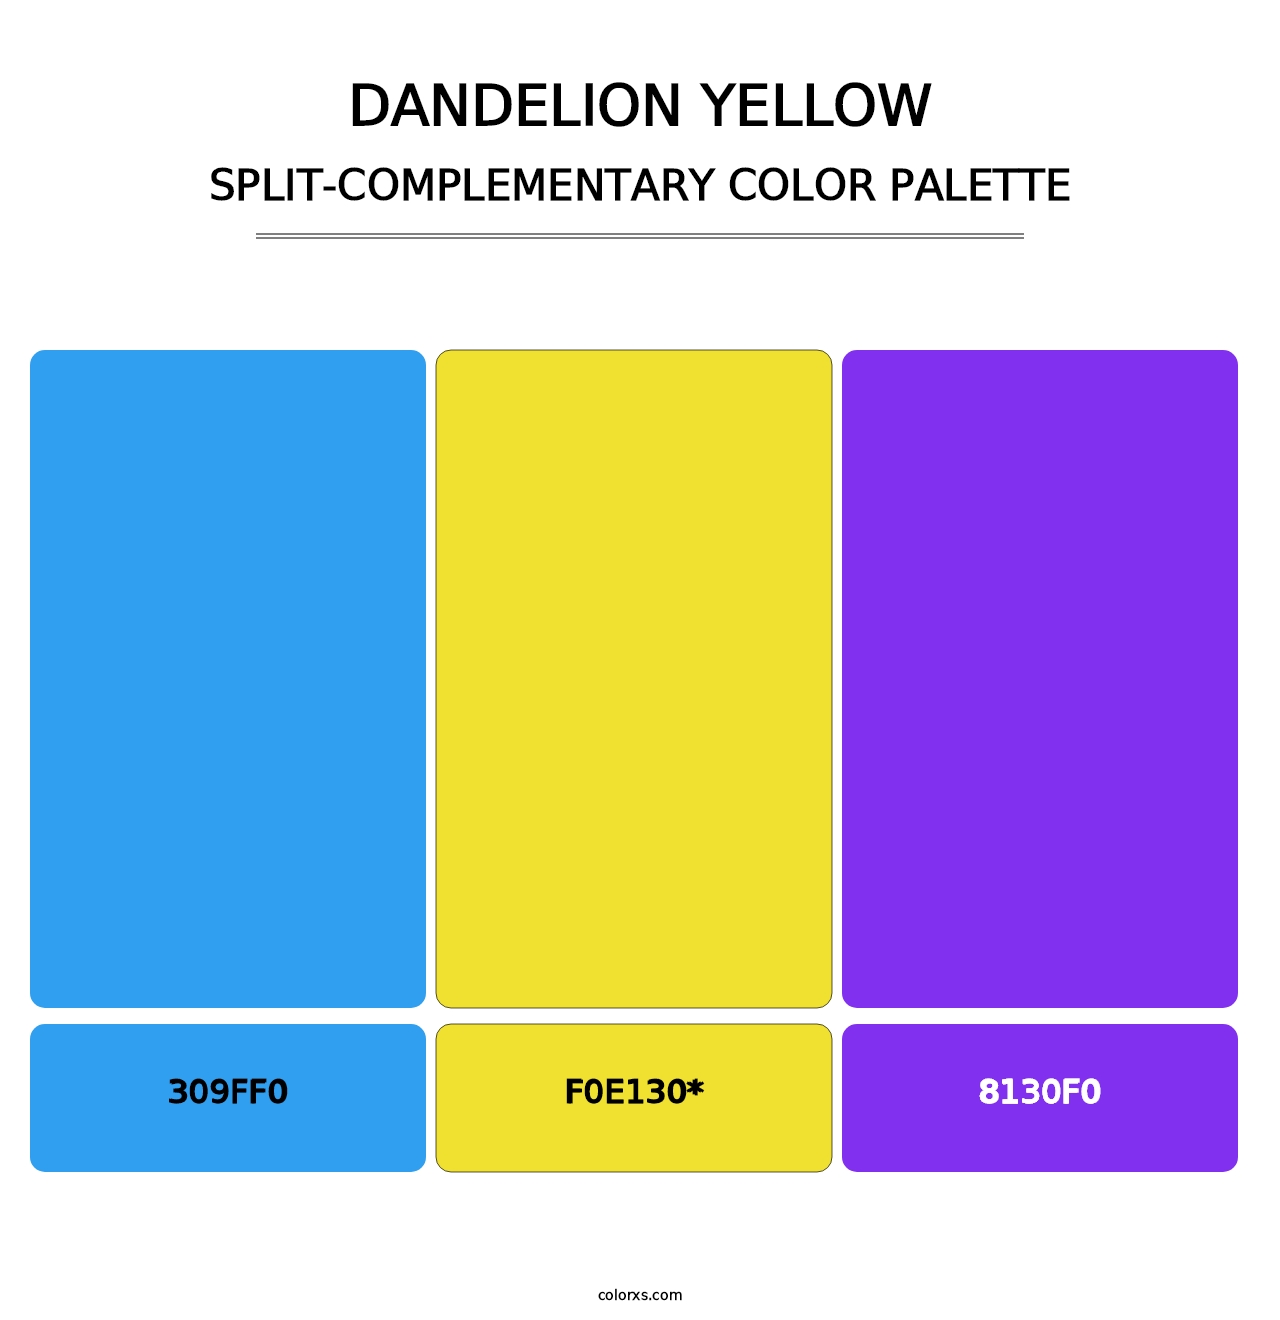 Dandelion Yellow - Split-Complementary Color Palette